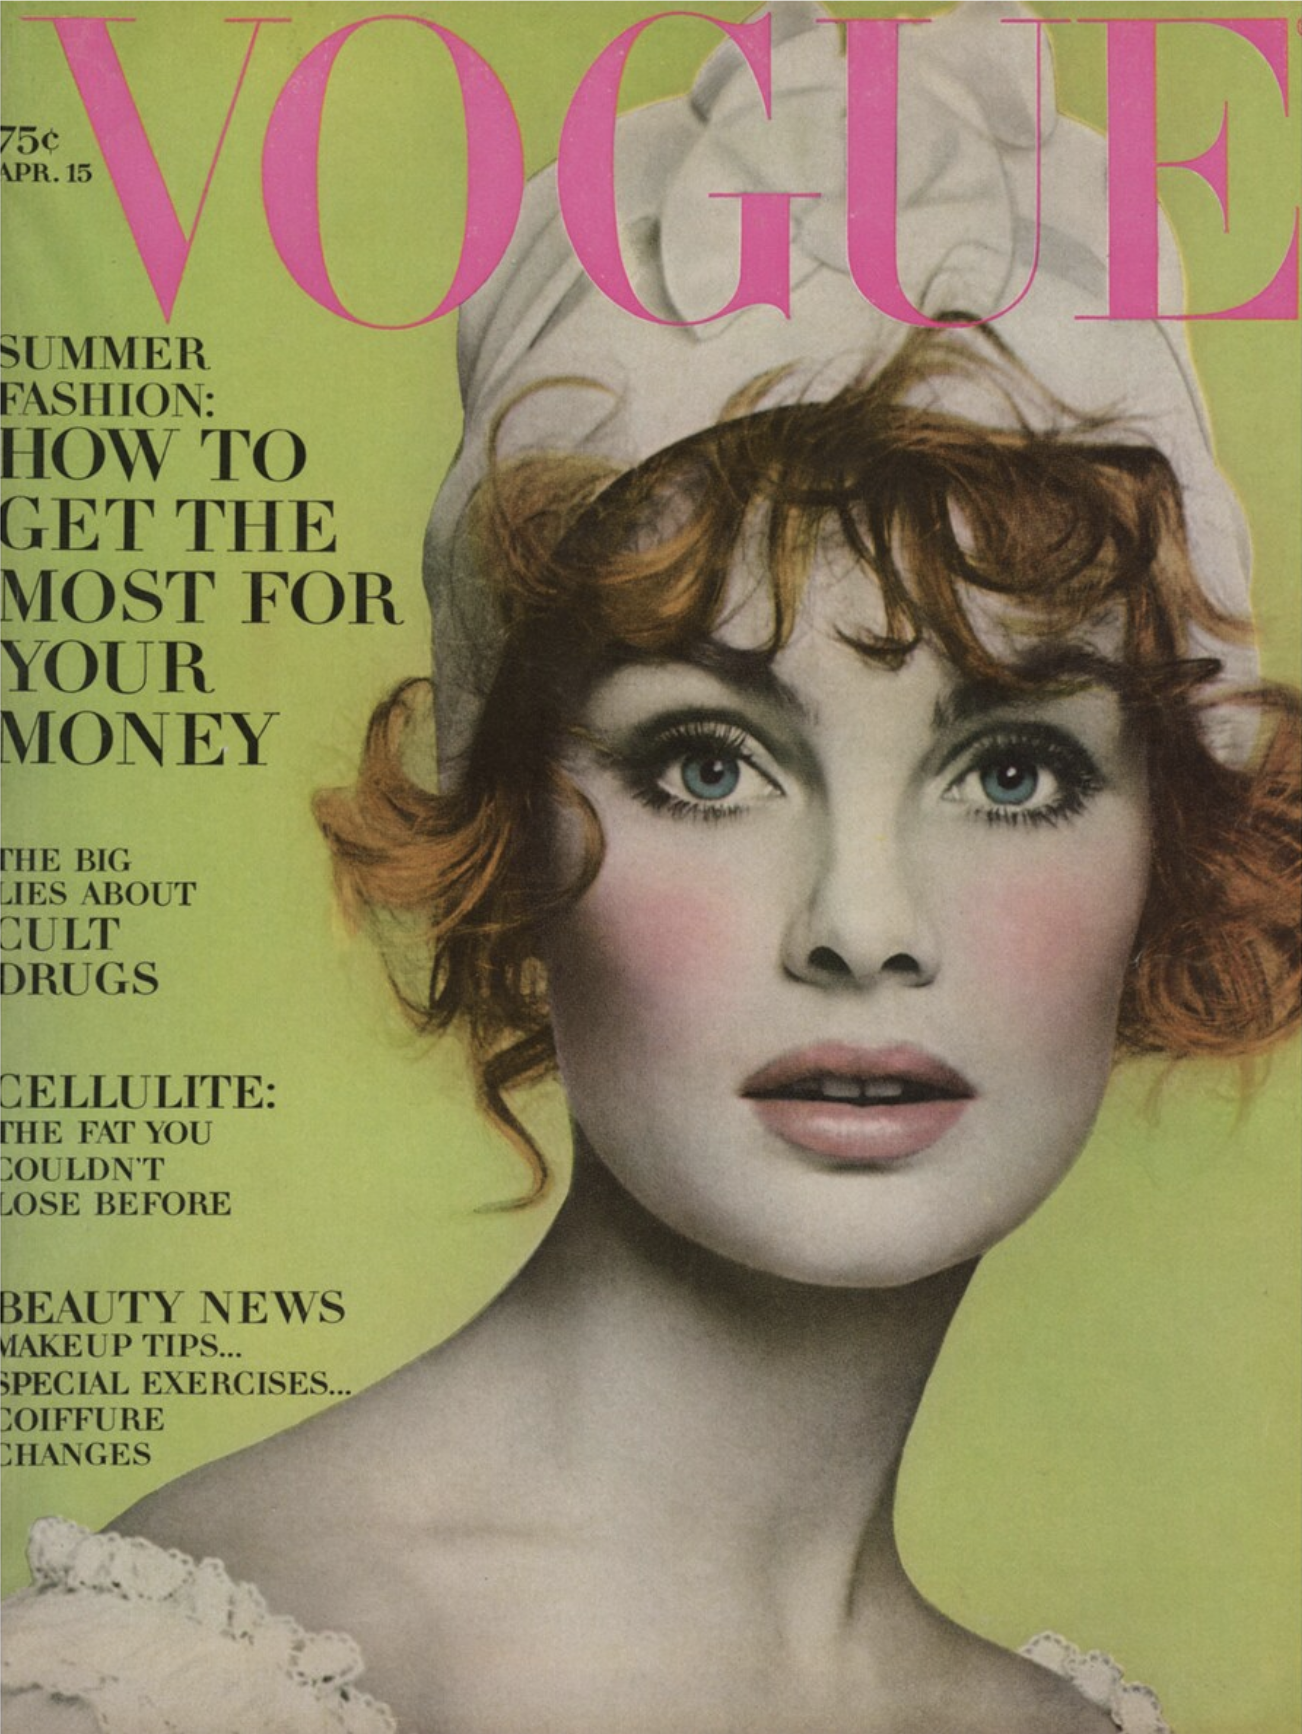 Jean-Shrimpton-by-Richard-Avedon-US-Vogue-April-15-1968-00006.png